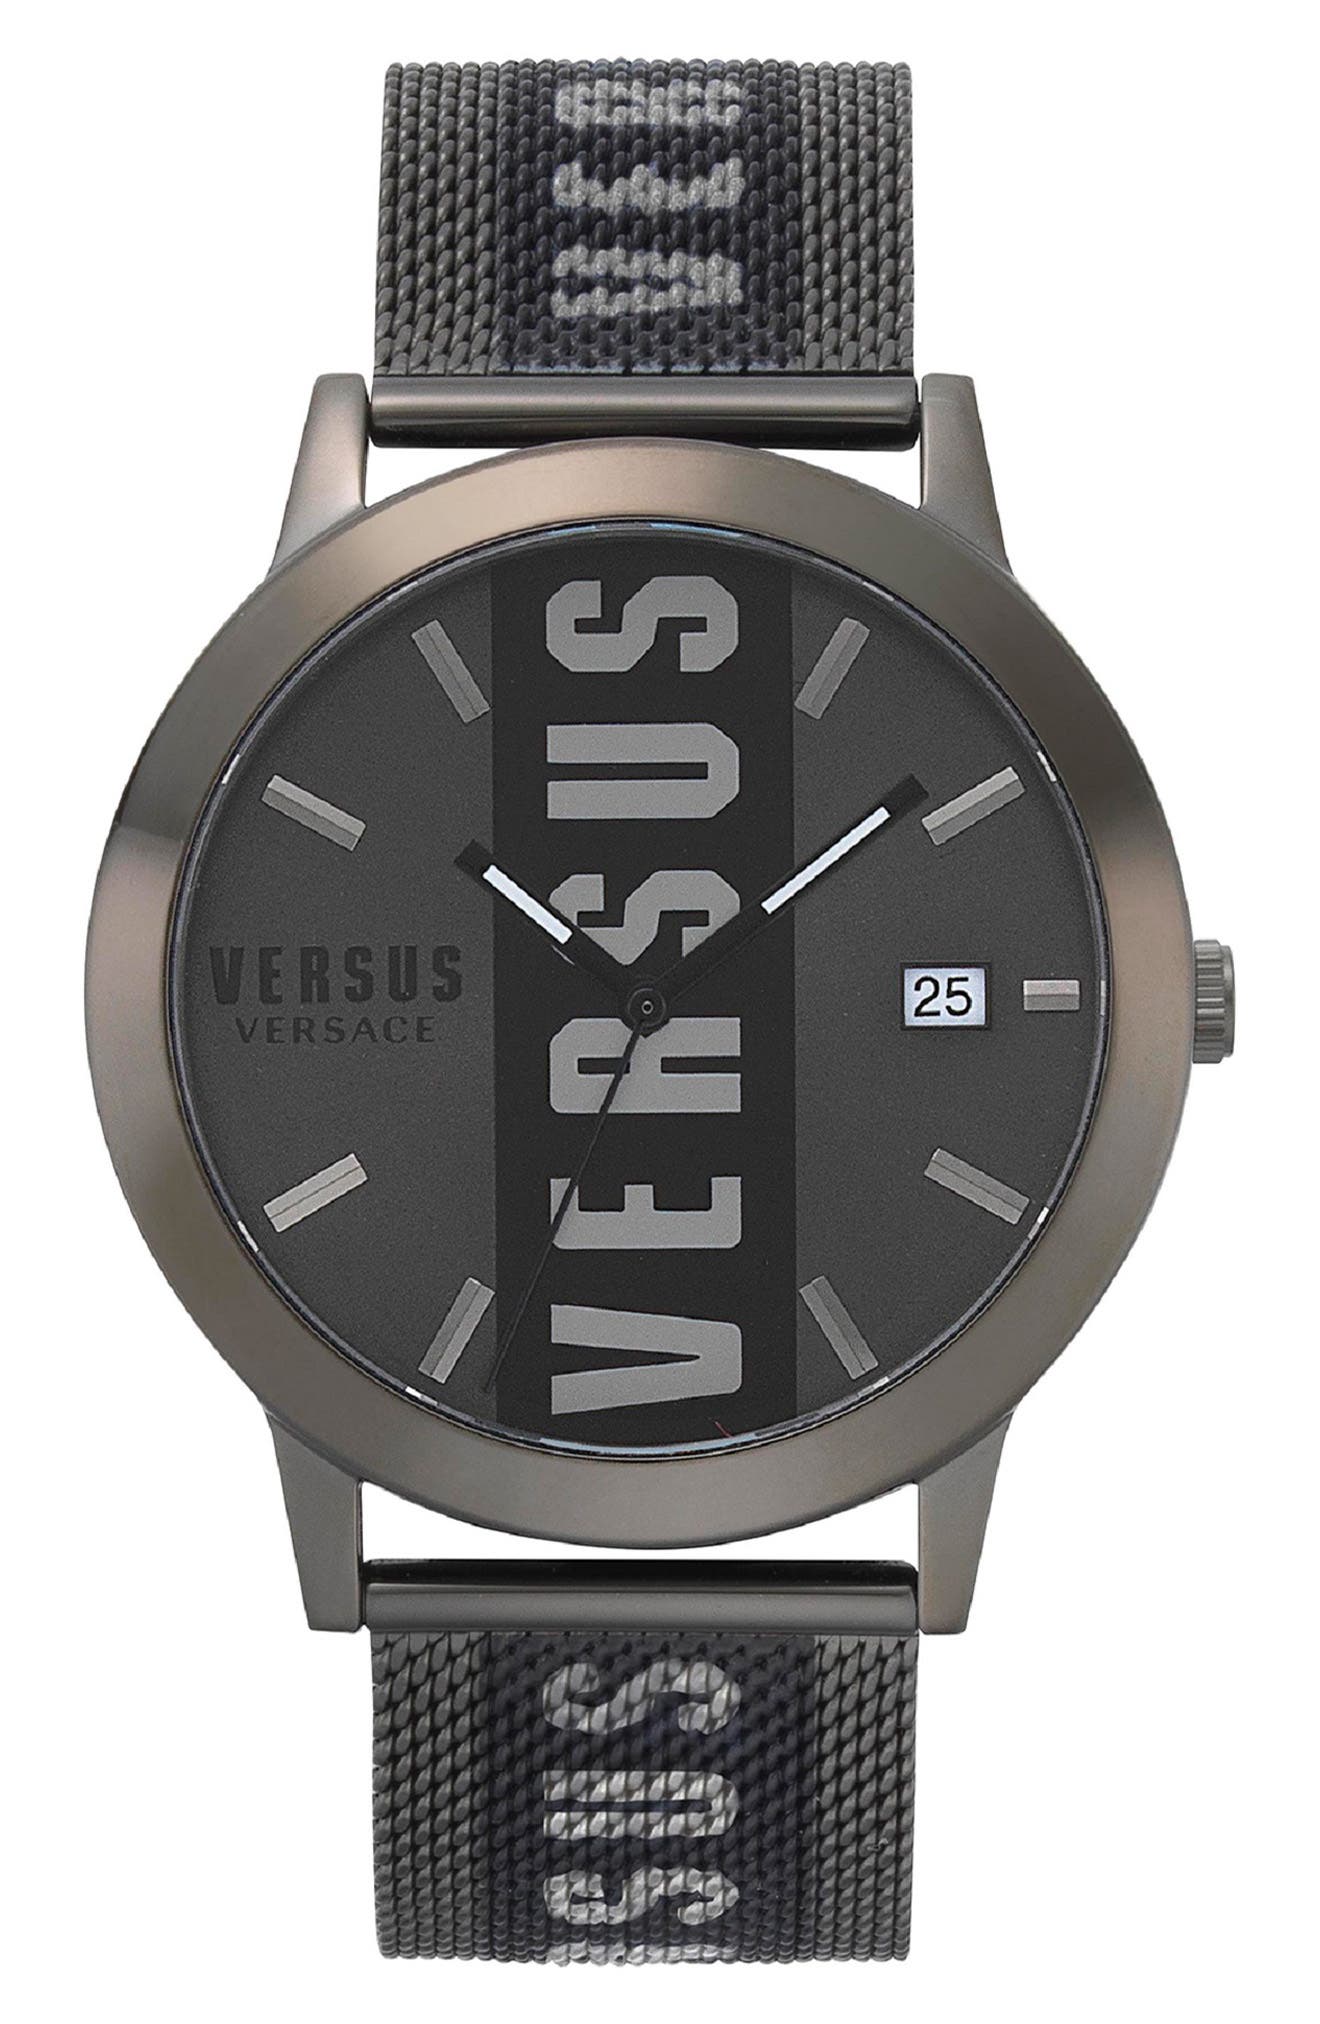 versus versace watch band replacement